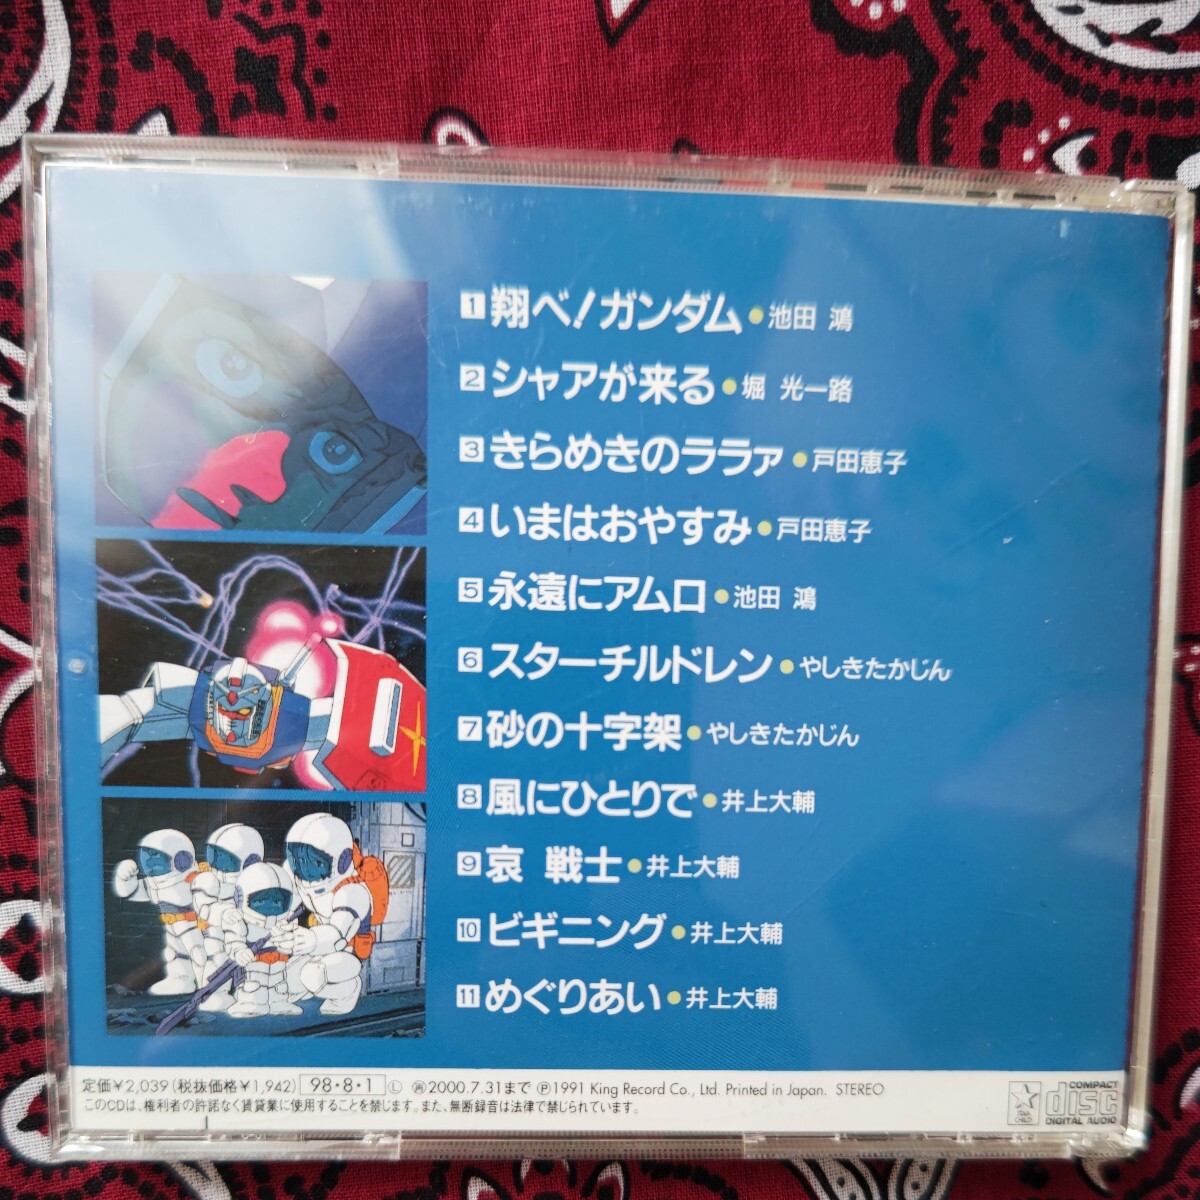  Mobile Suit Gundam / the best *ob* Gundam CD